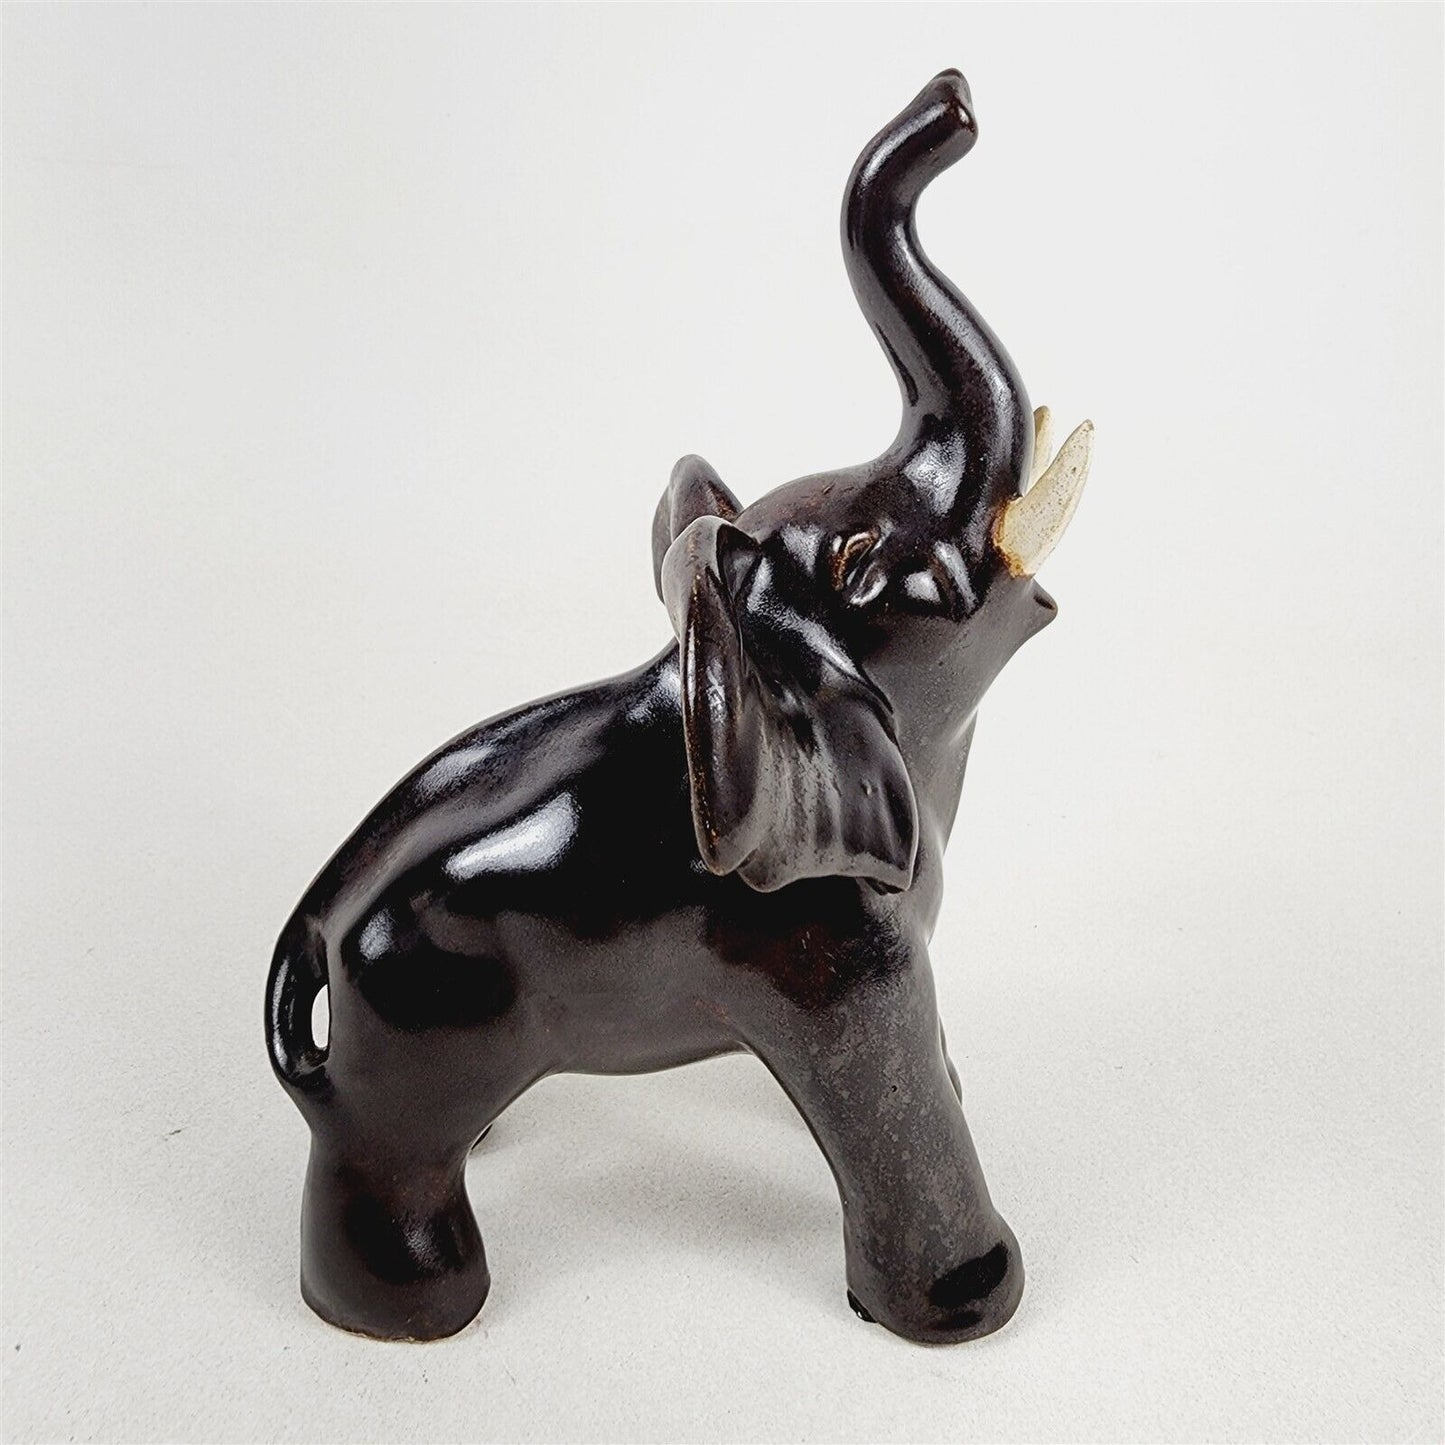 Vintage Ceramic Elephant Figurine Safari Home Decor - 7 1/2" tall